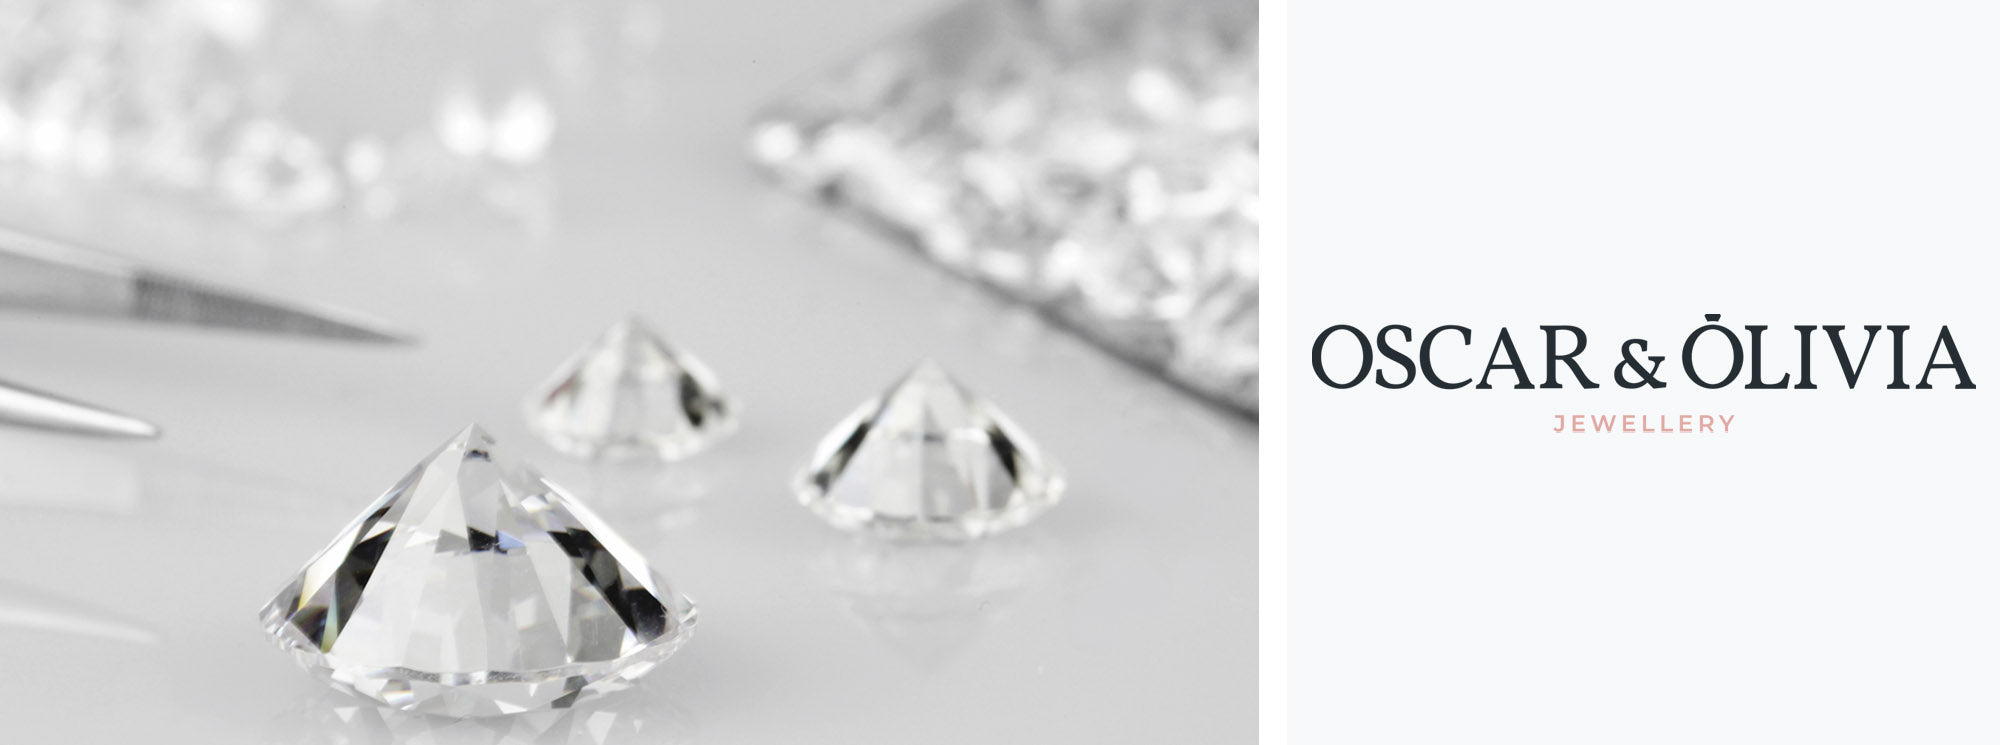 Lab grown diamond eternity wedding rings at Oscar & Olivia Jewellery